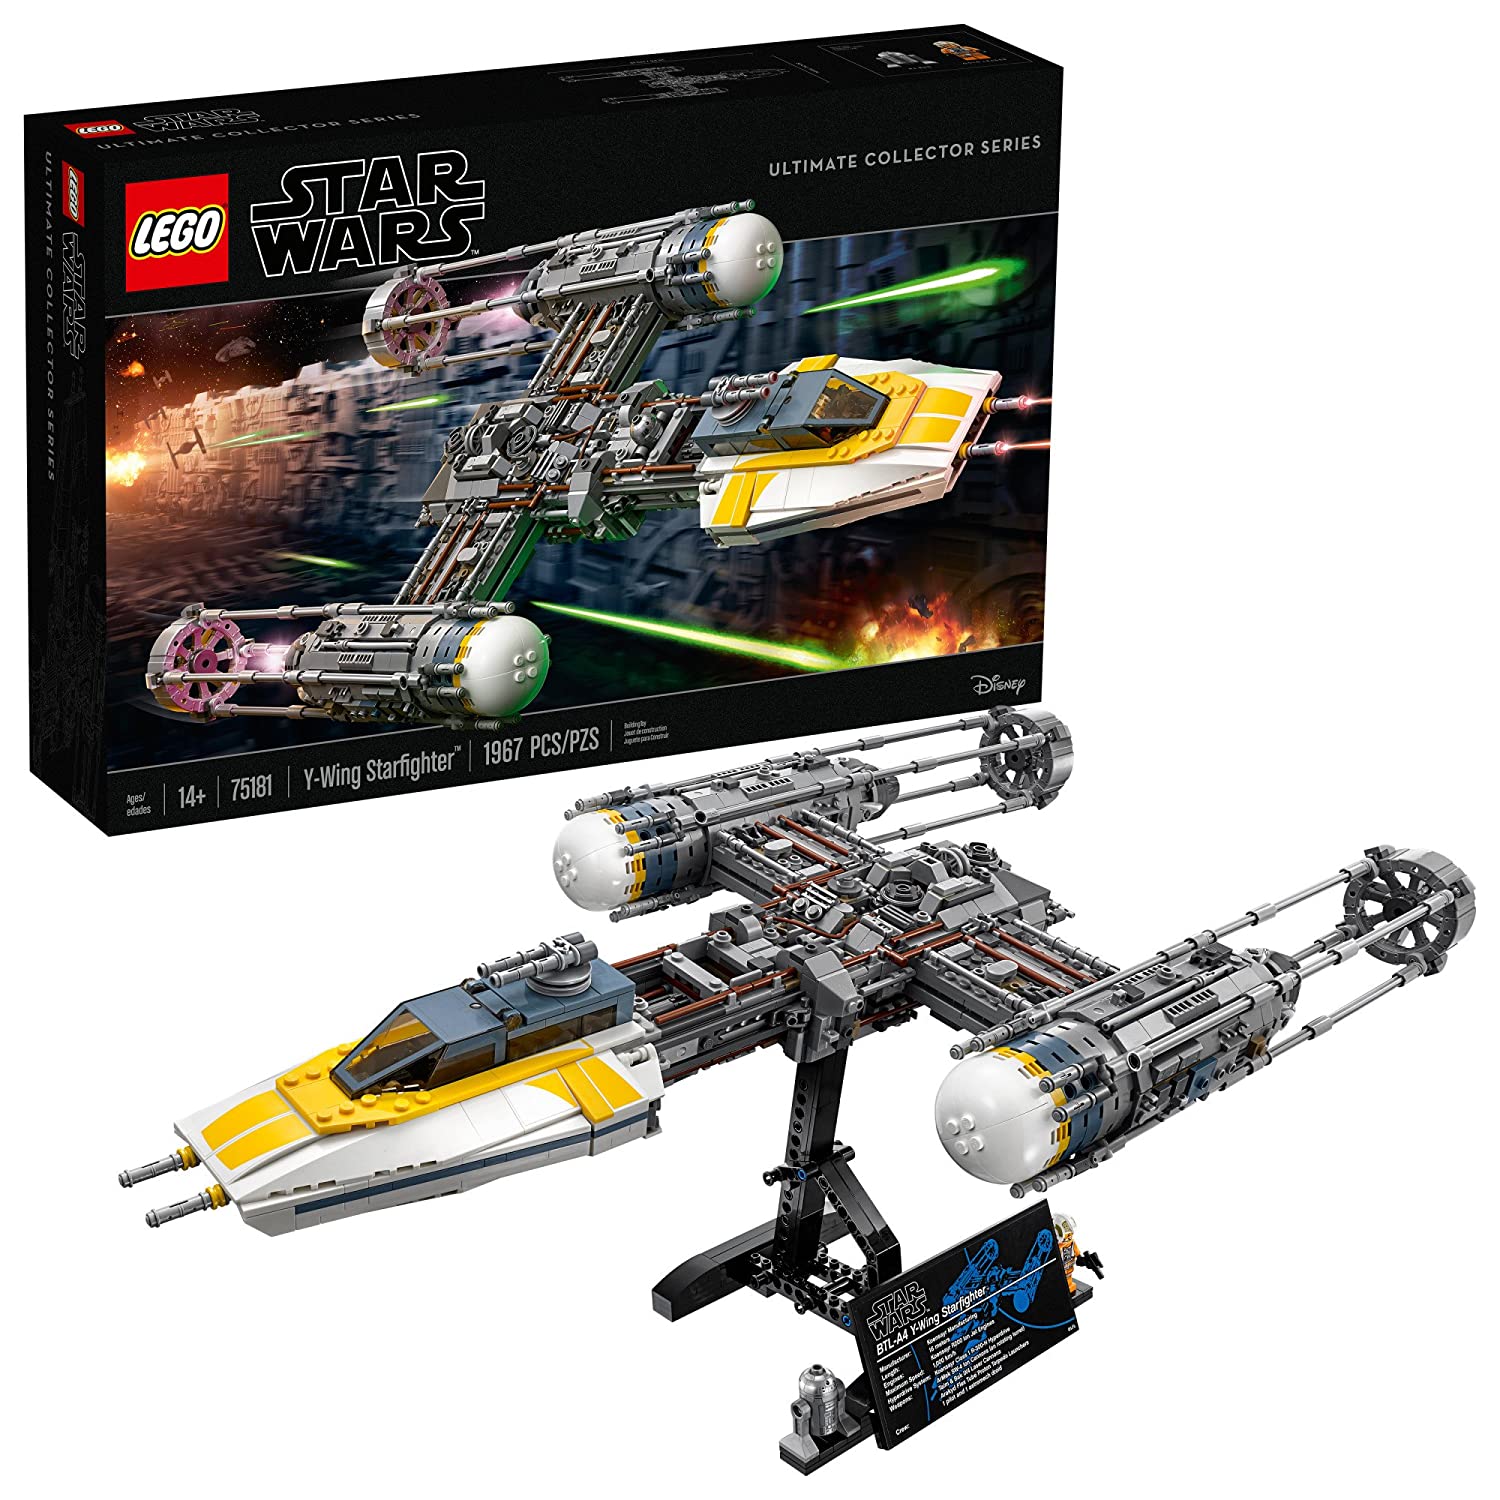 LEGO Star Wars 6253568 Y-Wing Starfighter 75181